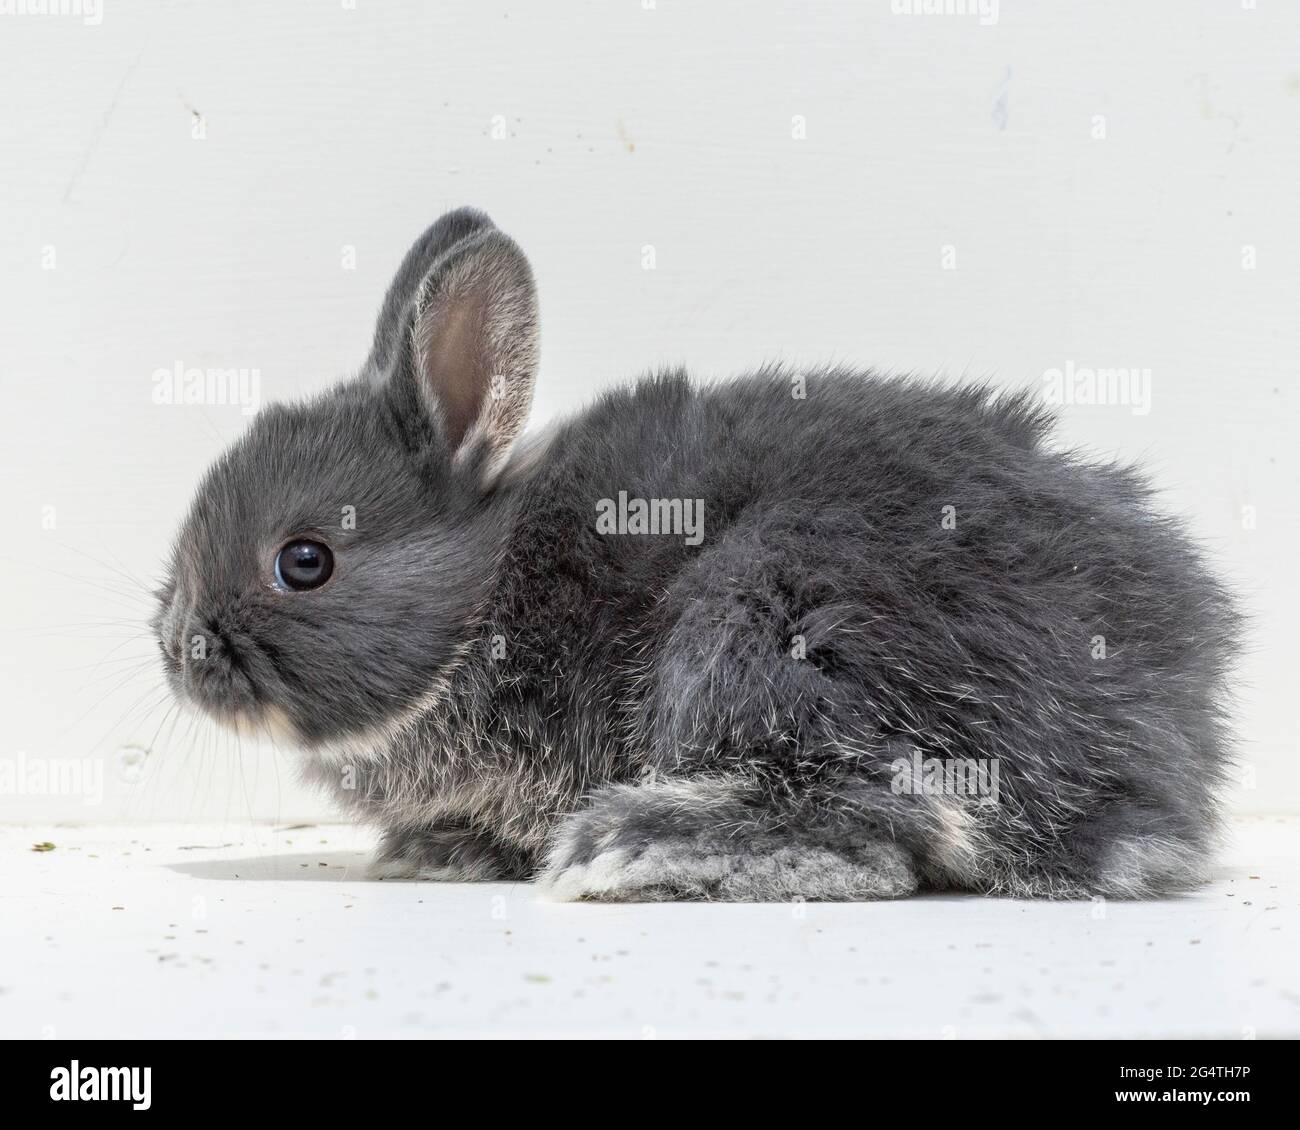 Netherland dwarf baby rabbit Stock Photo